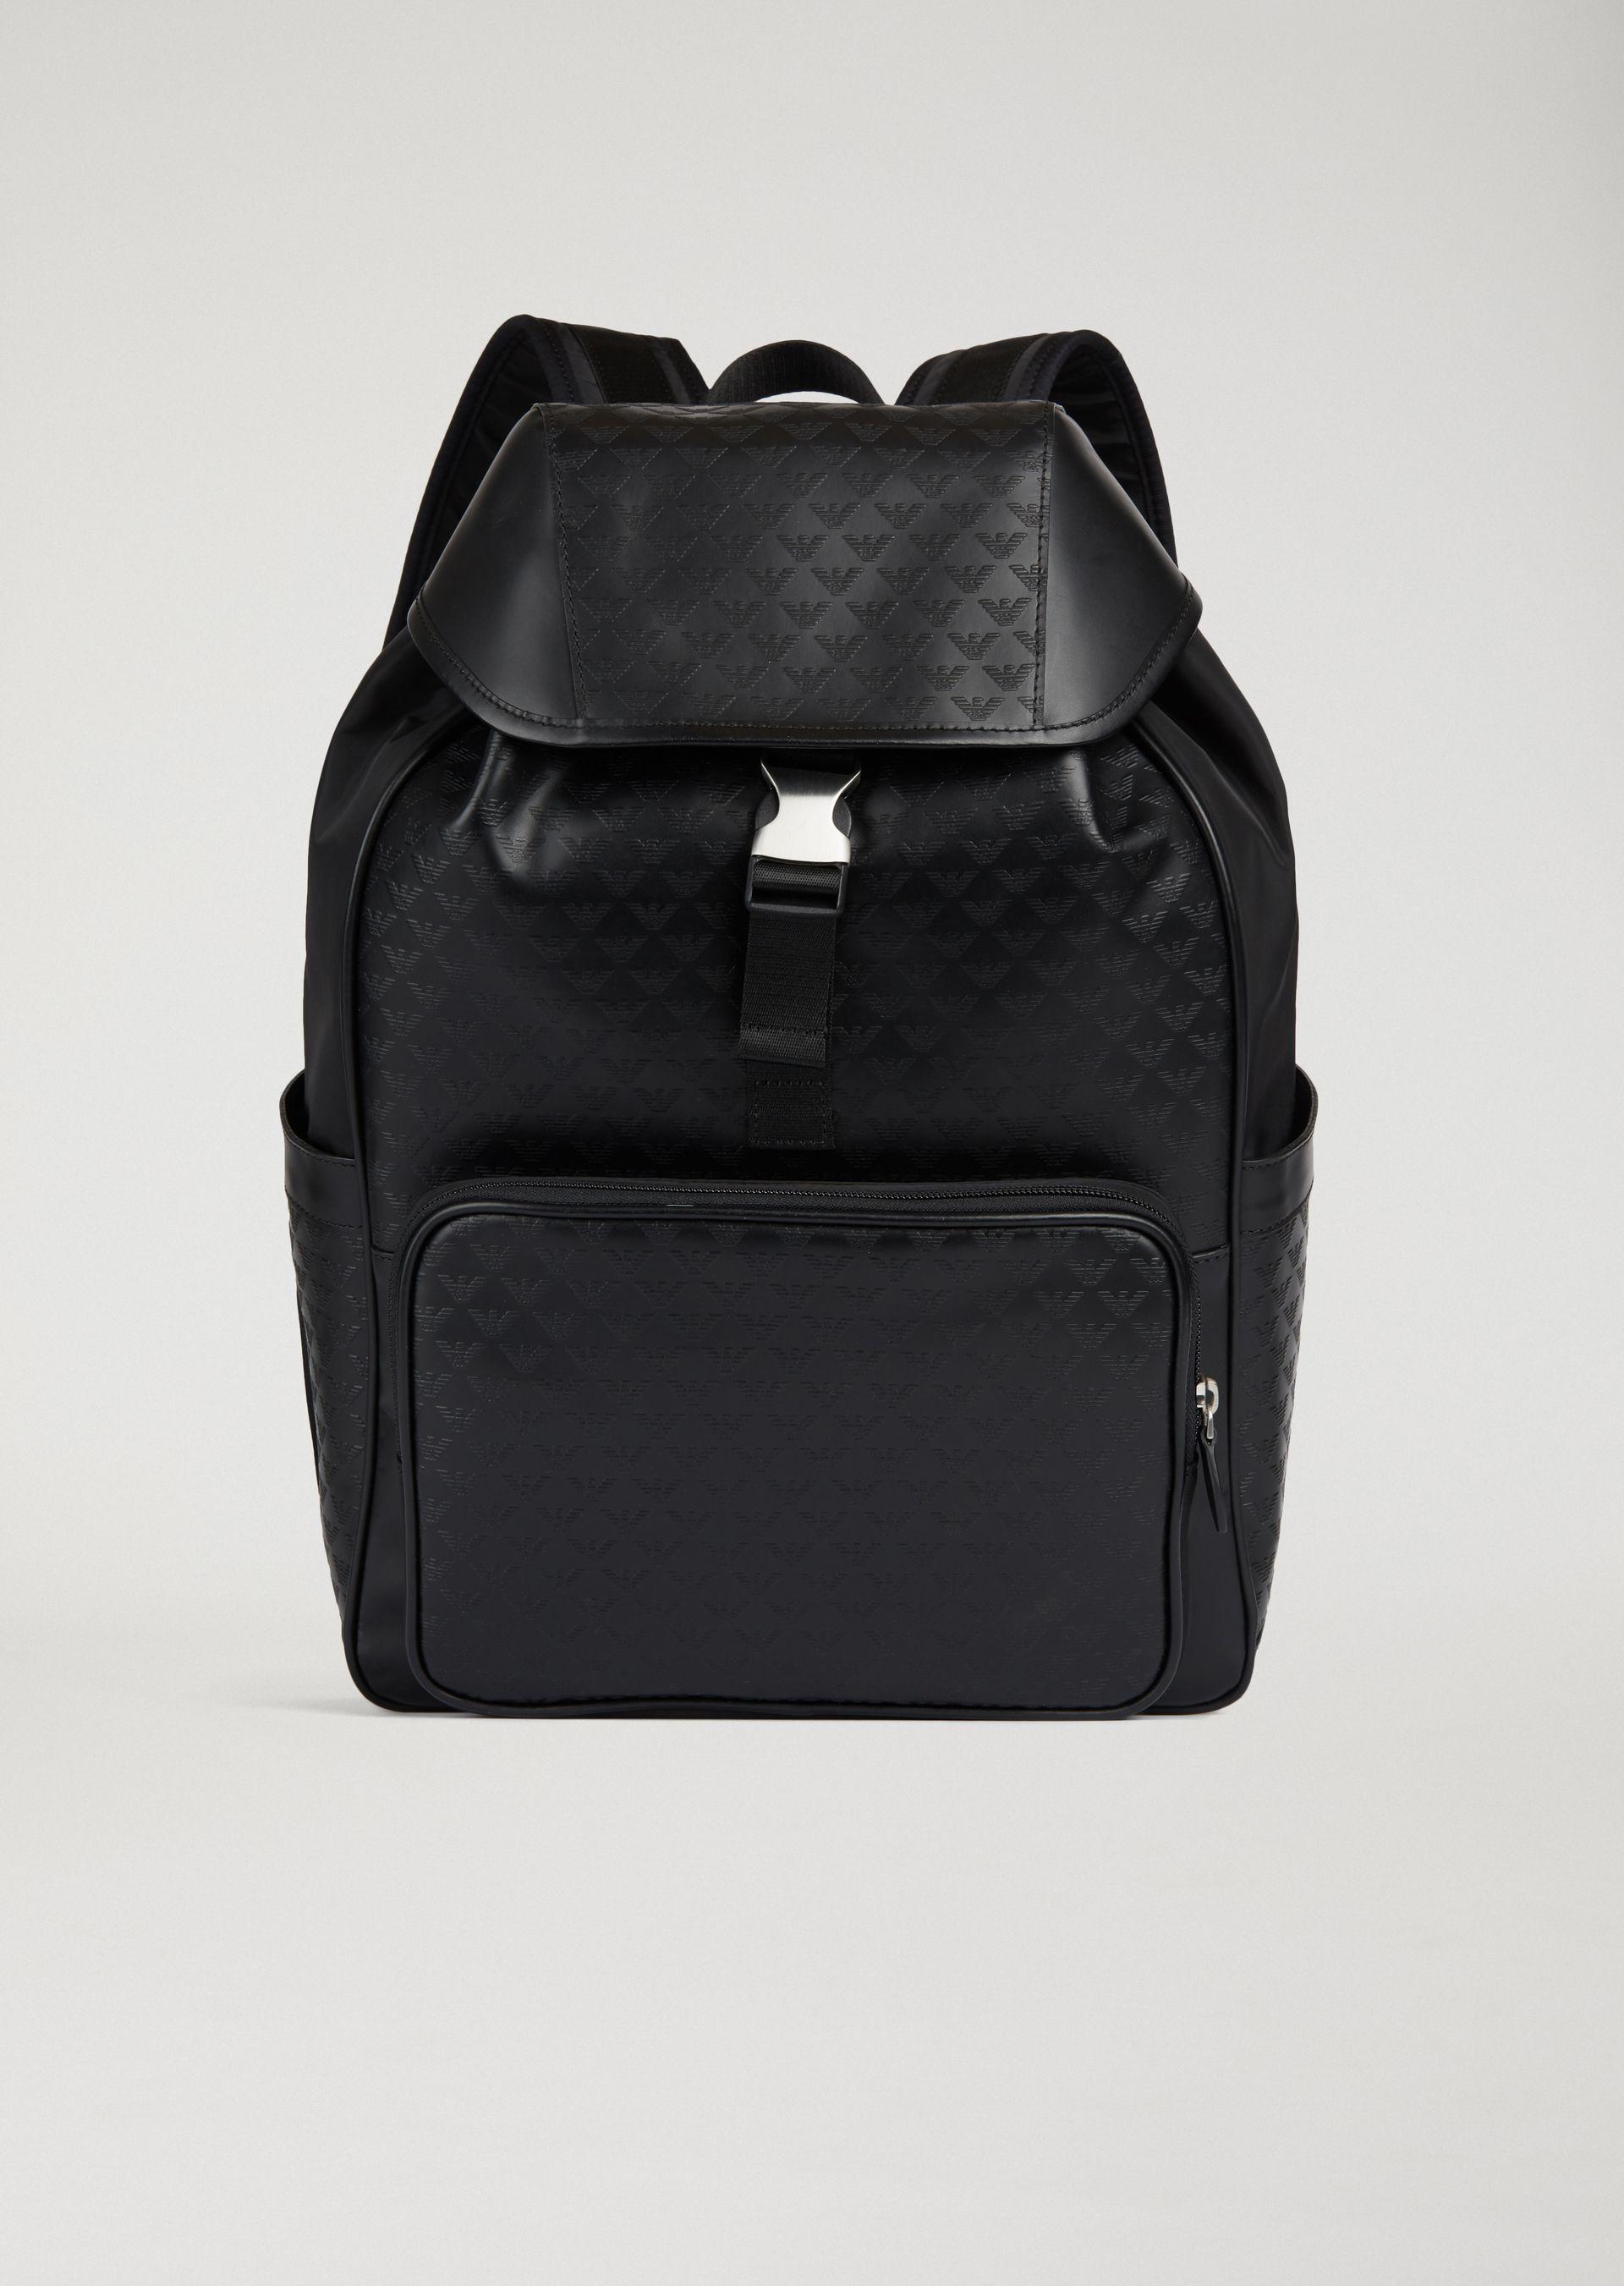 Emporio Armani Backpacks - Item 45424682 In Black | ModeSens